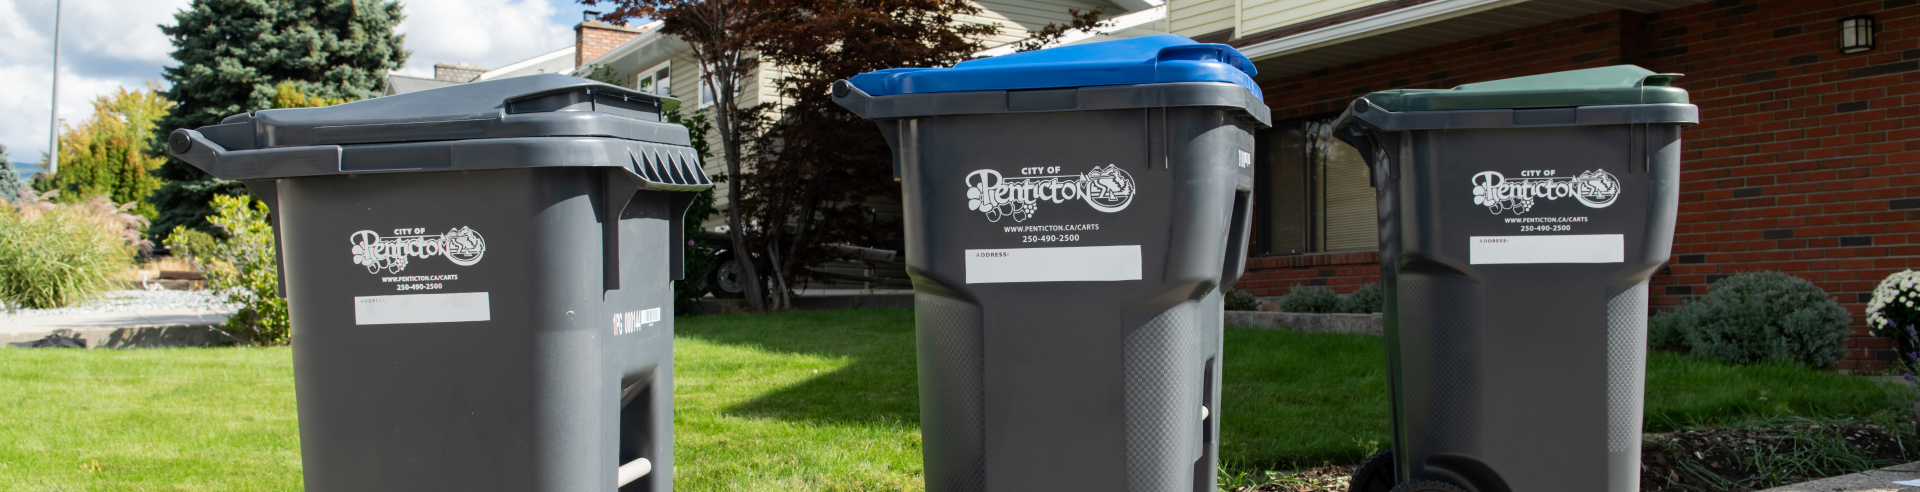 Garbag, Recycling and Yard Waste carts